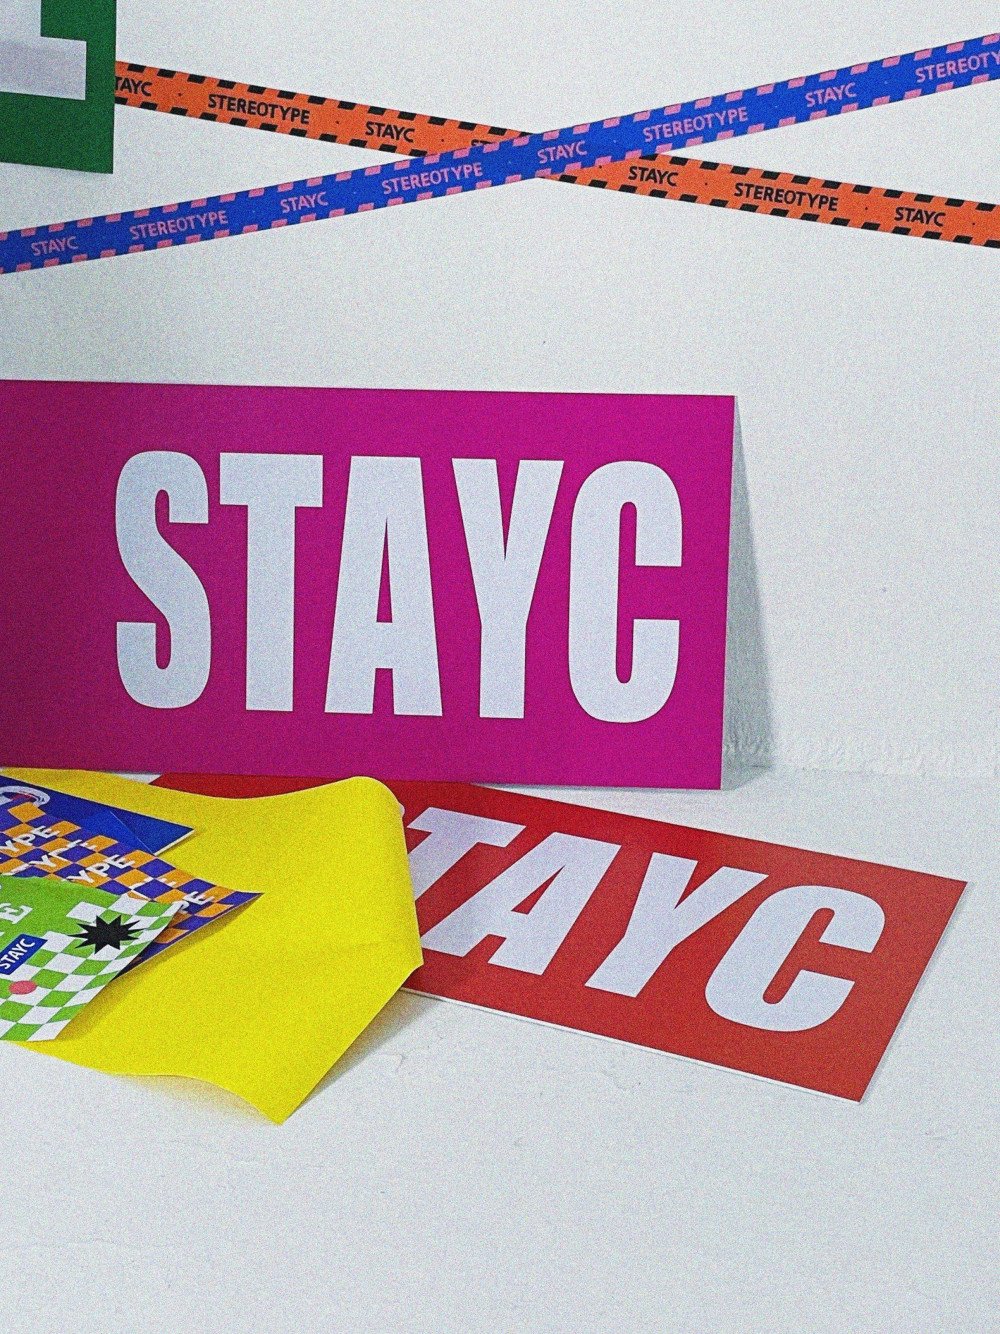 [Камбэк] STAYC мини-альбом "STEREOTYPE": музыкальный клип "STEREOTYPE" (перфоманс-версия)